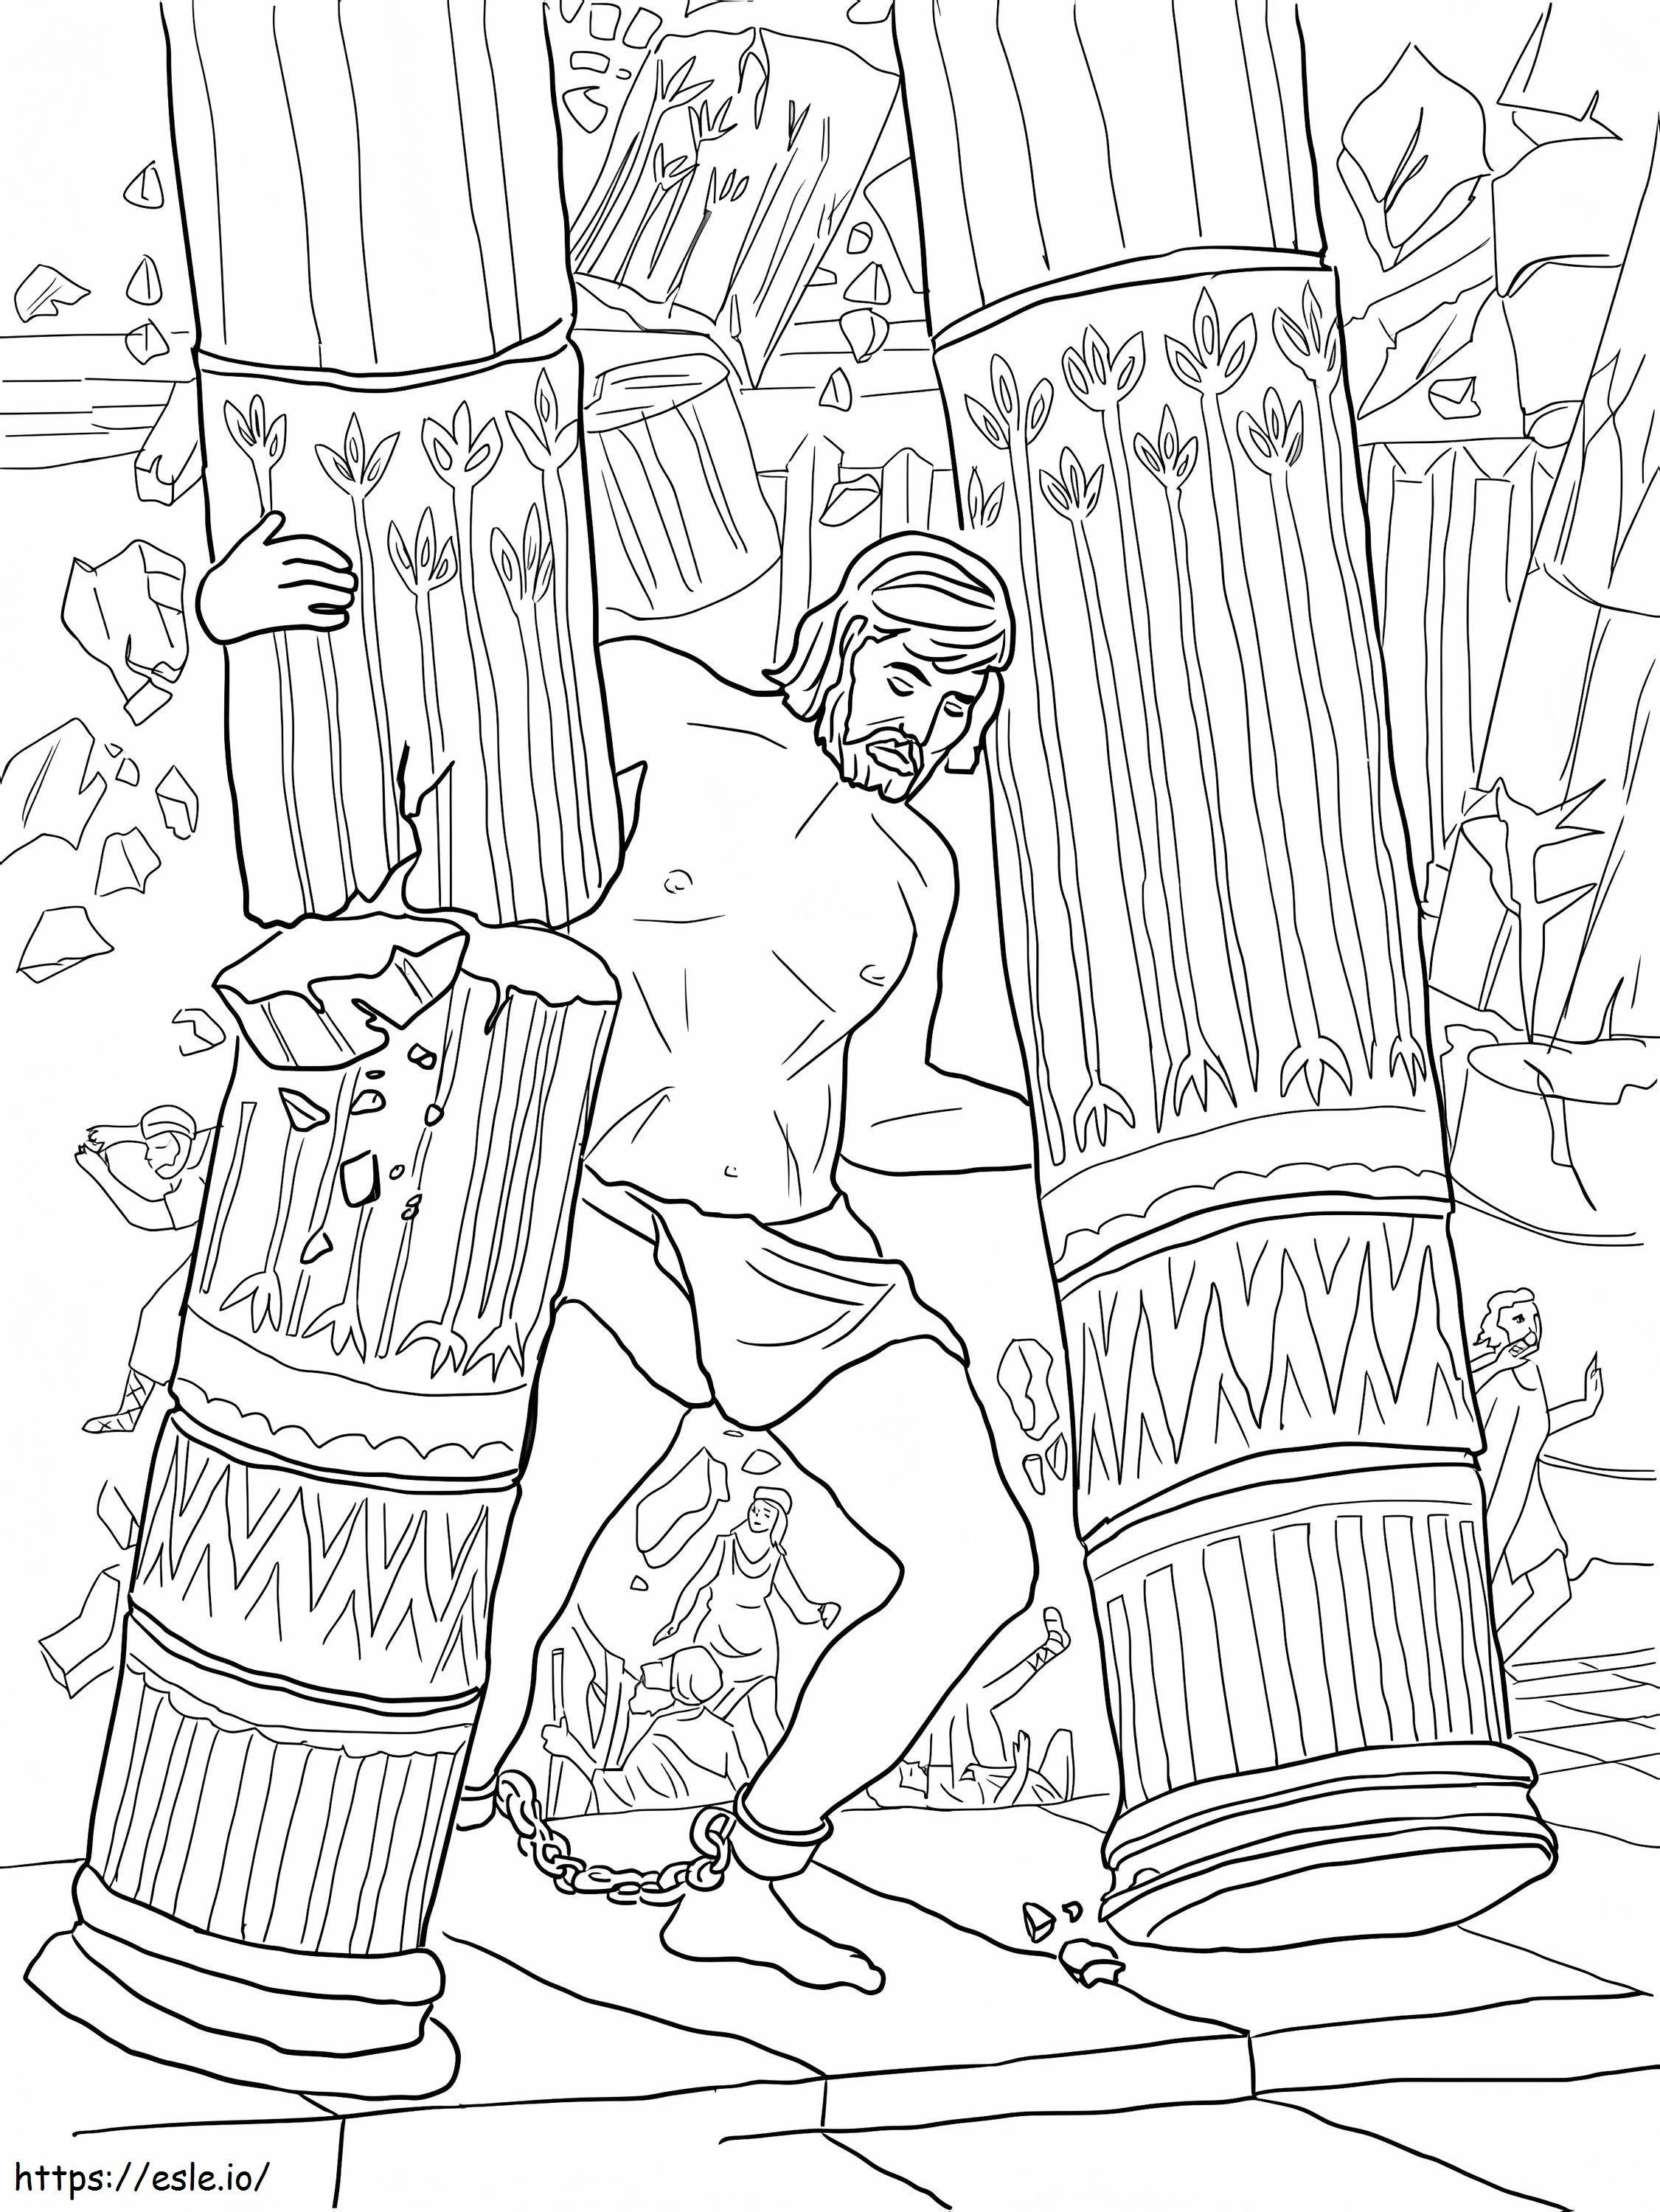 Simson stößt Säulen nieder ausmalbilder